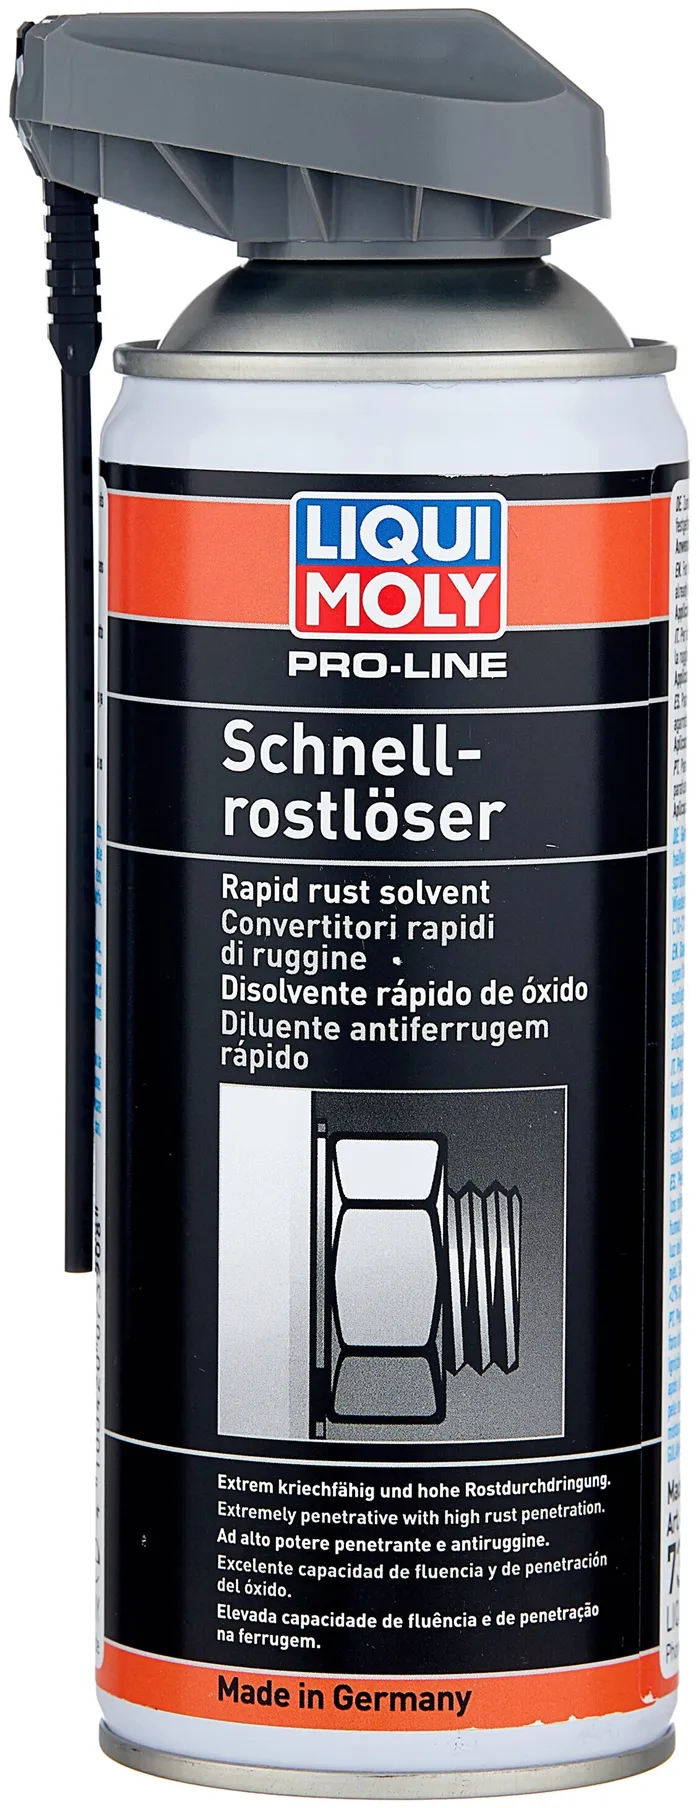 LIQUI MOLY Pro-Line Schnell-Rostloser